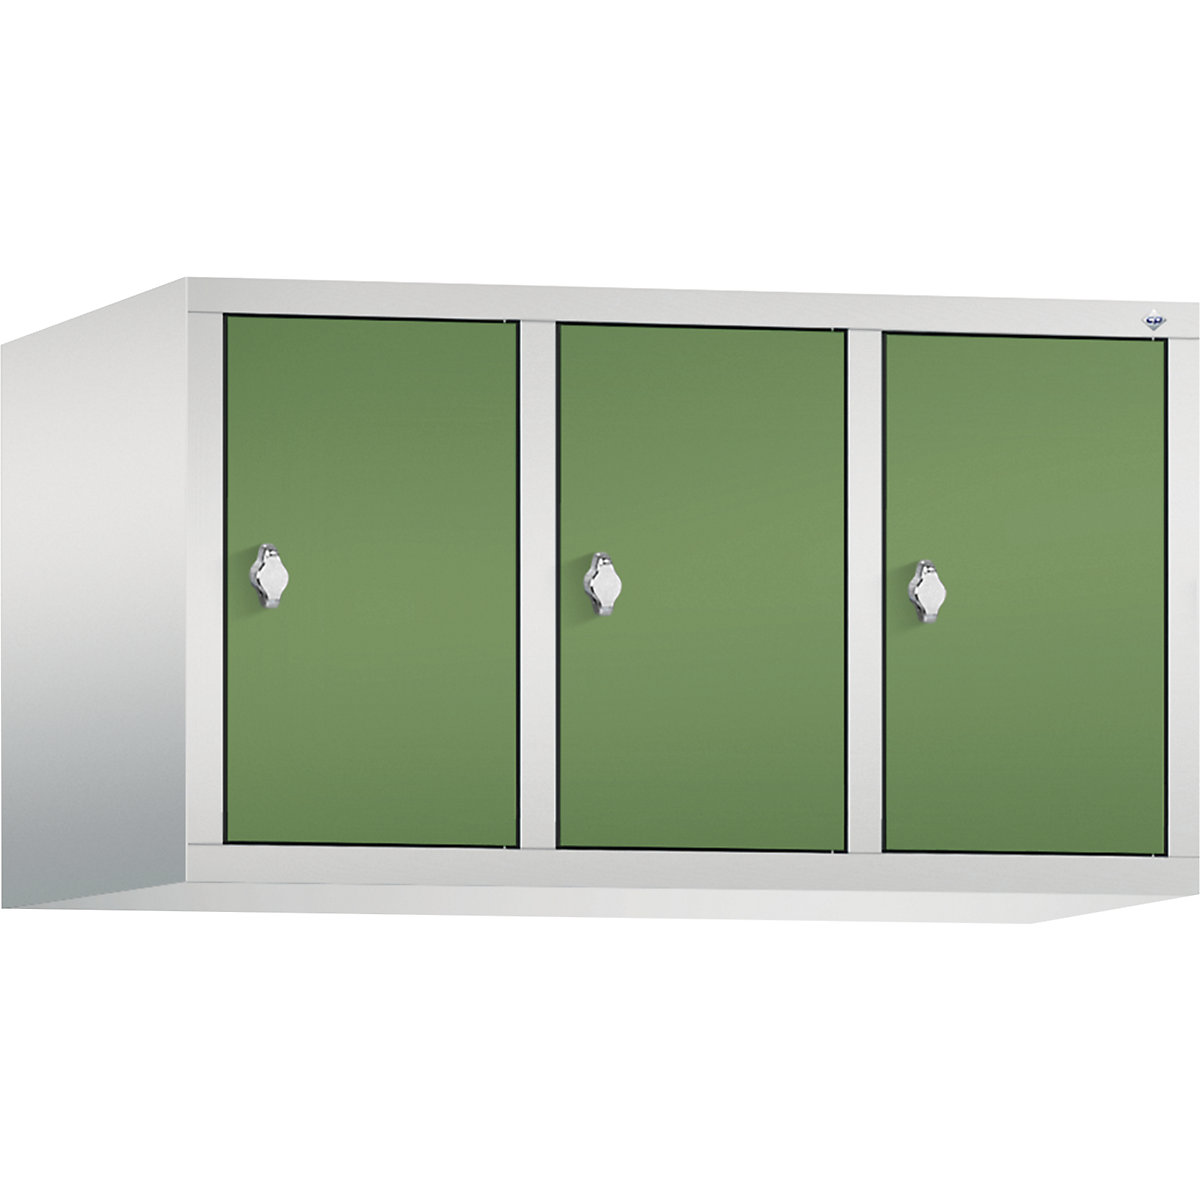 C+P – Altillo CLASSIC, 3 compartimentos, anchura de compartimento 300 mm, gris luminoso / verde reseda